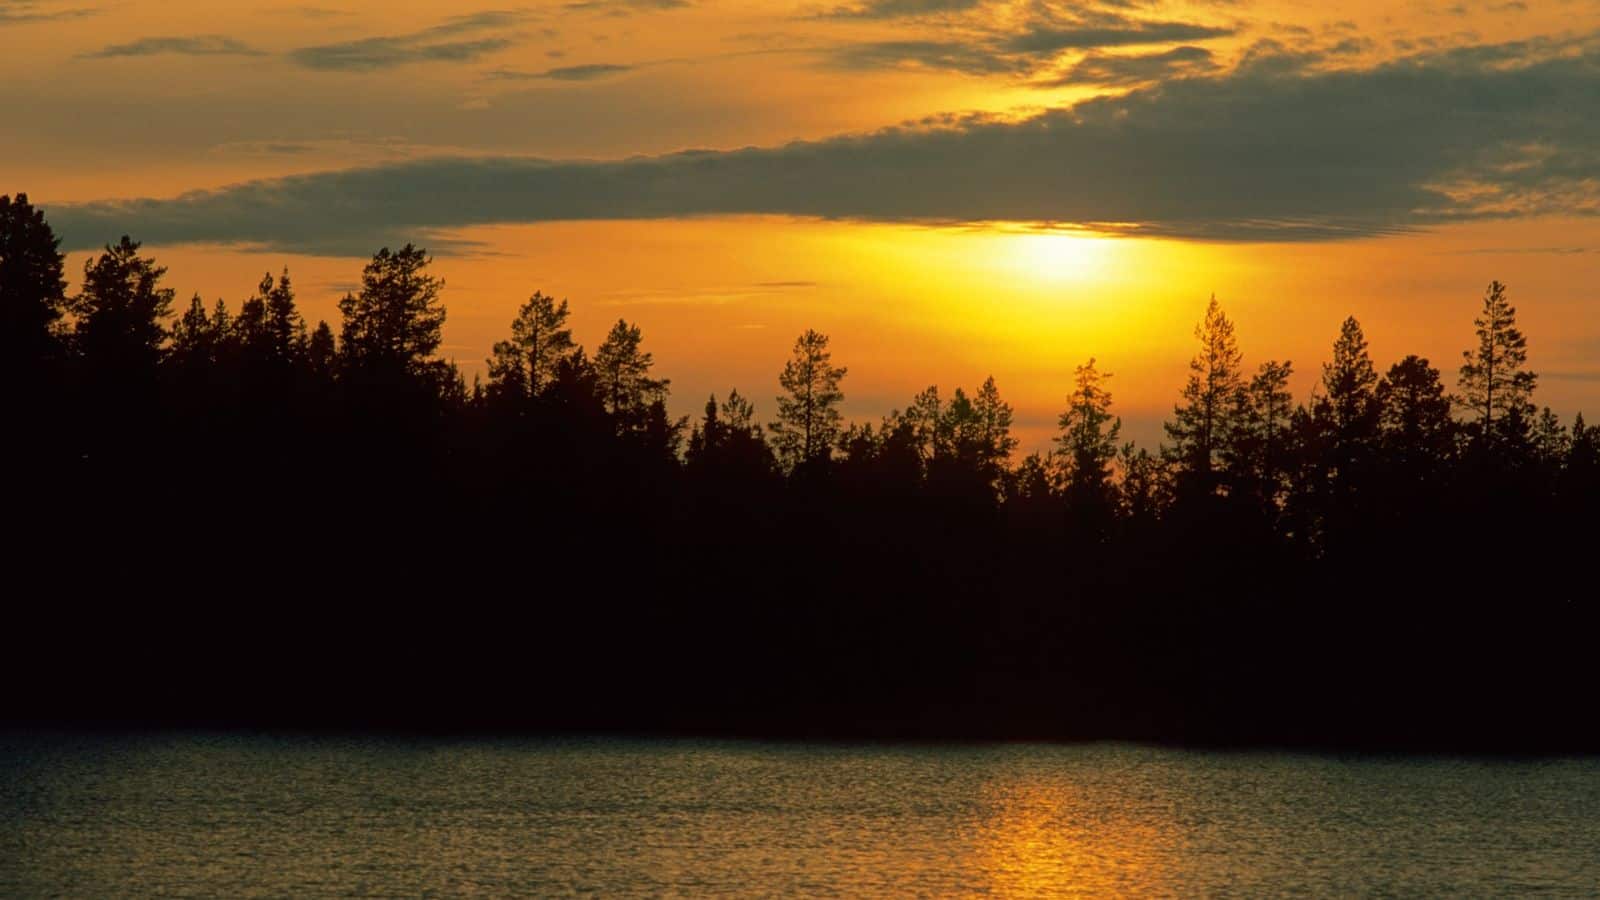 Finnish Lapland's midnight sun is a rare phenomenon worth capturing